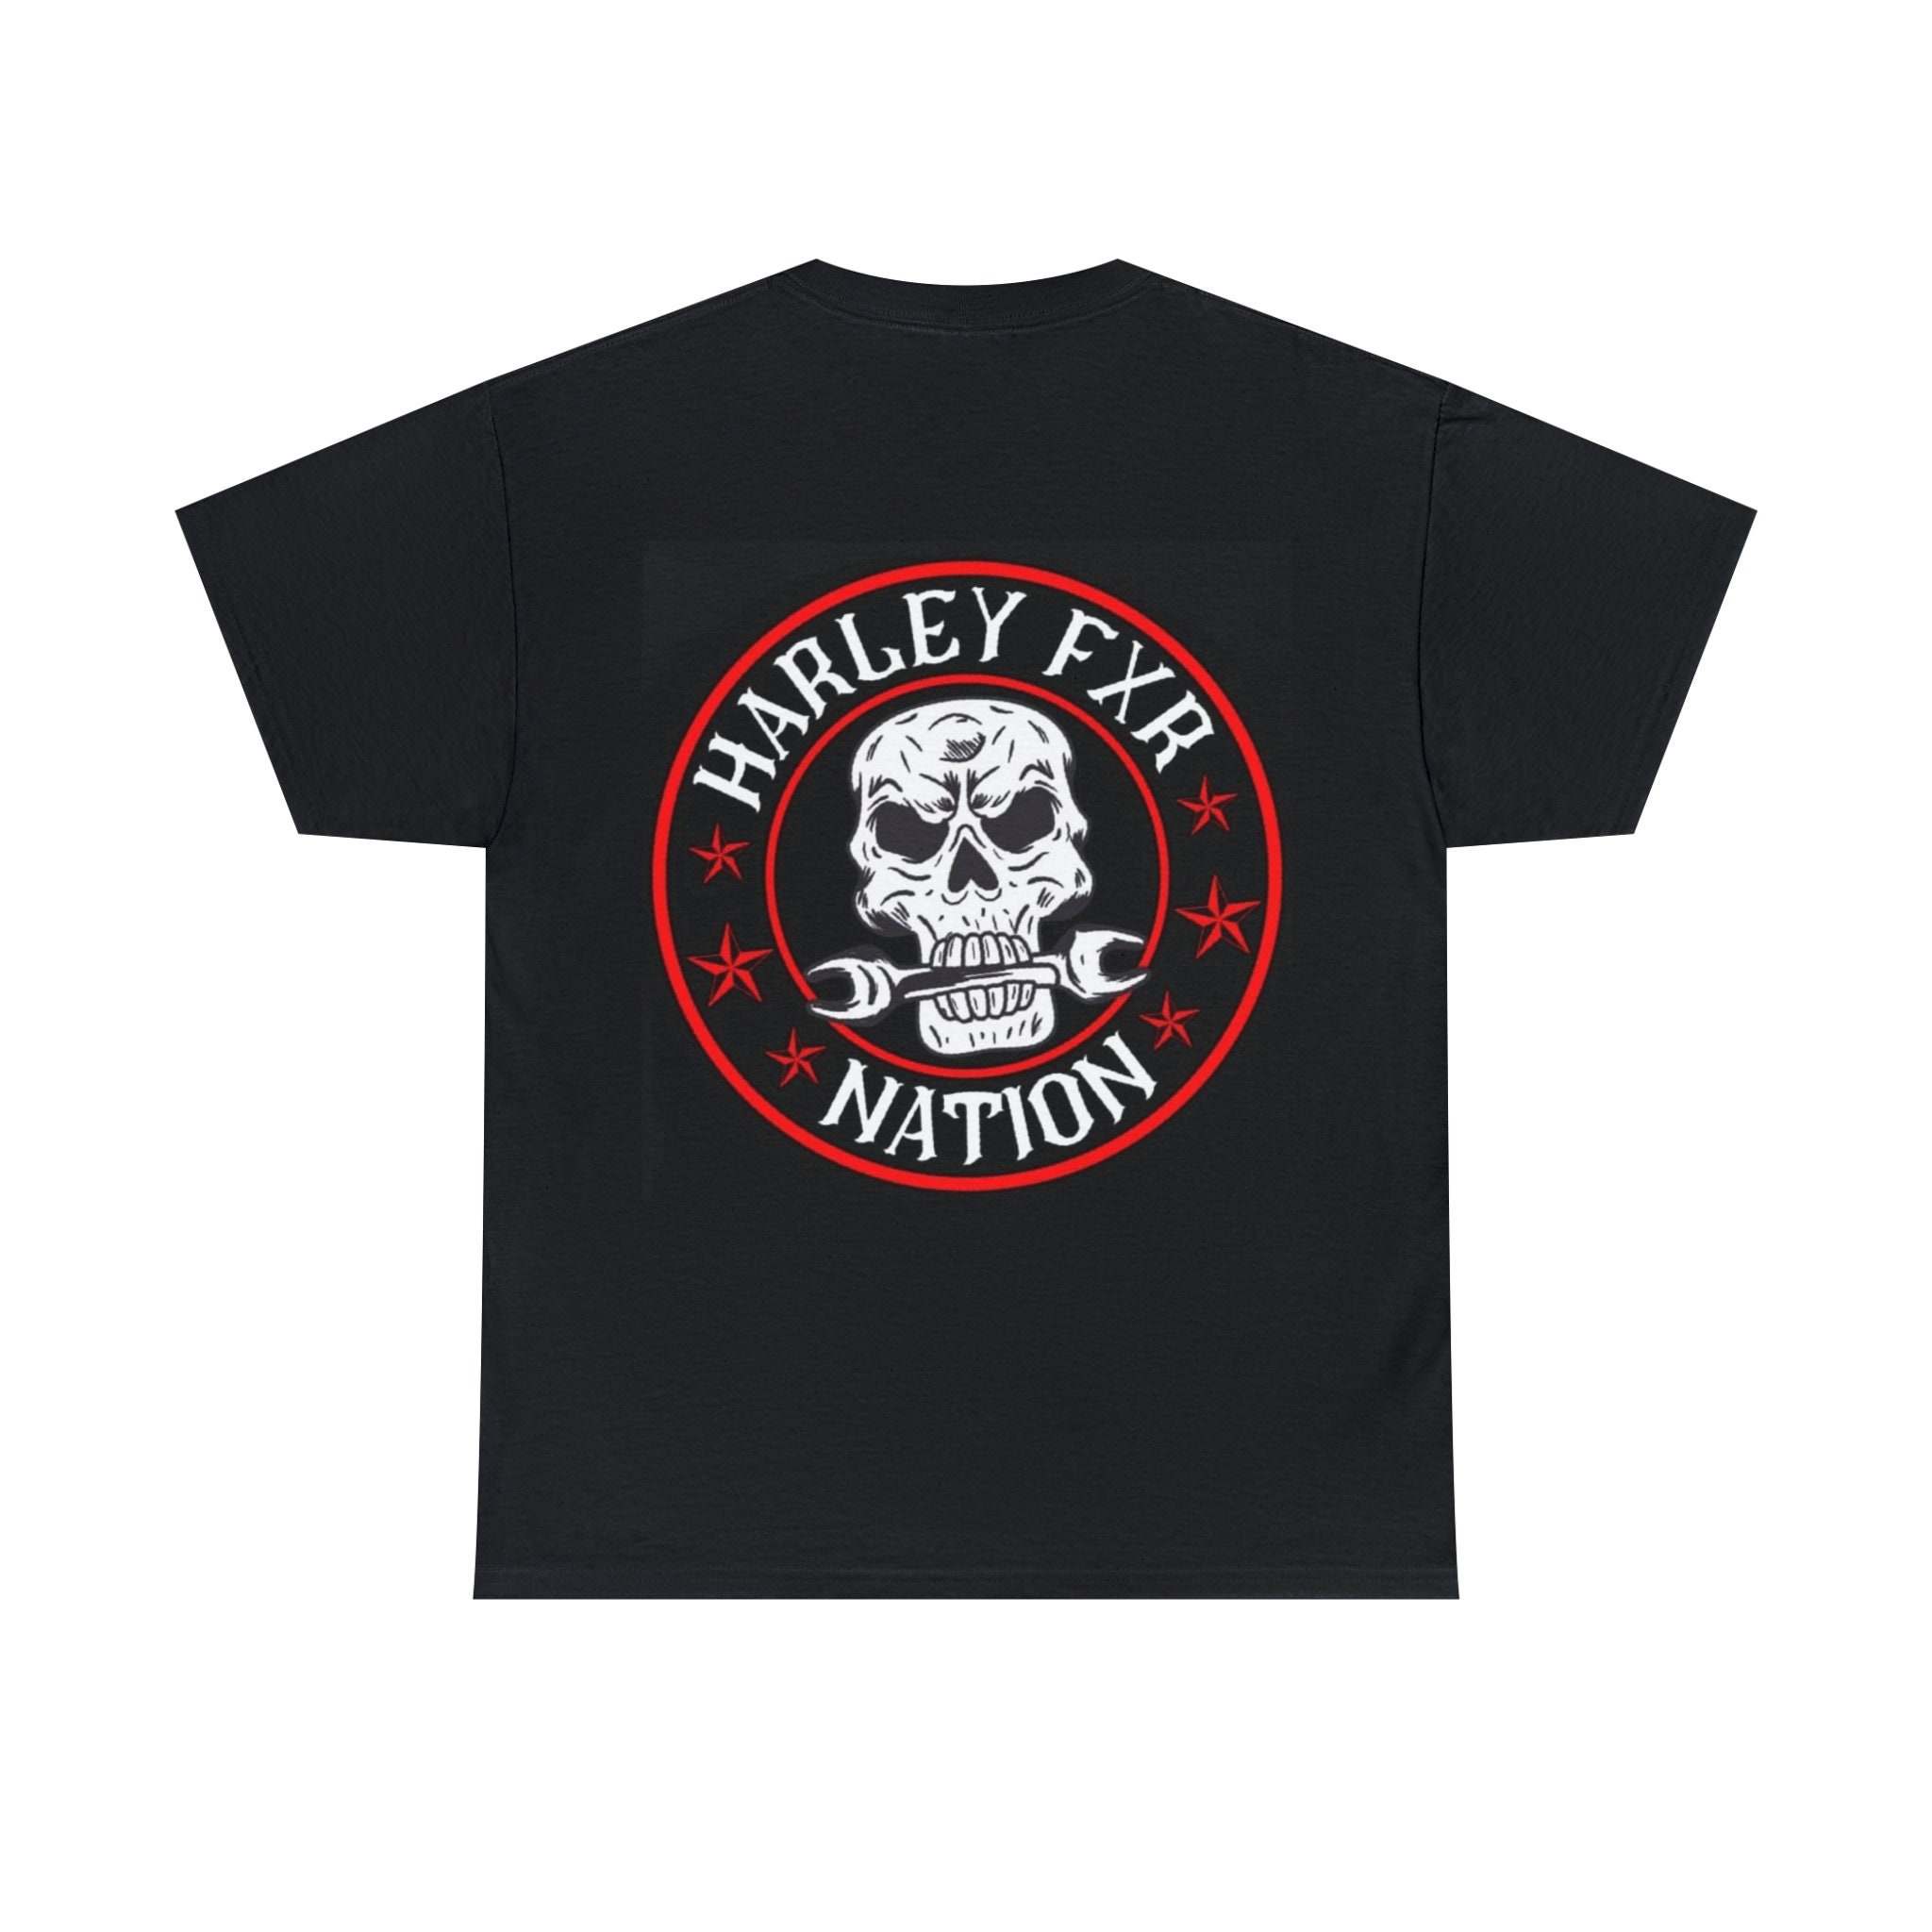 Harley Davidson Jamaica Men's T-Shirt Regular Casual Adult Different Sizes